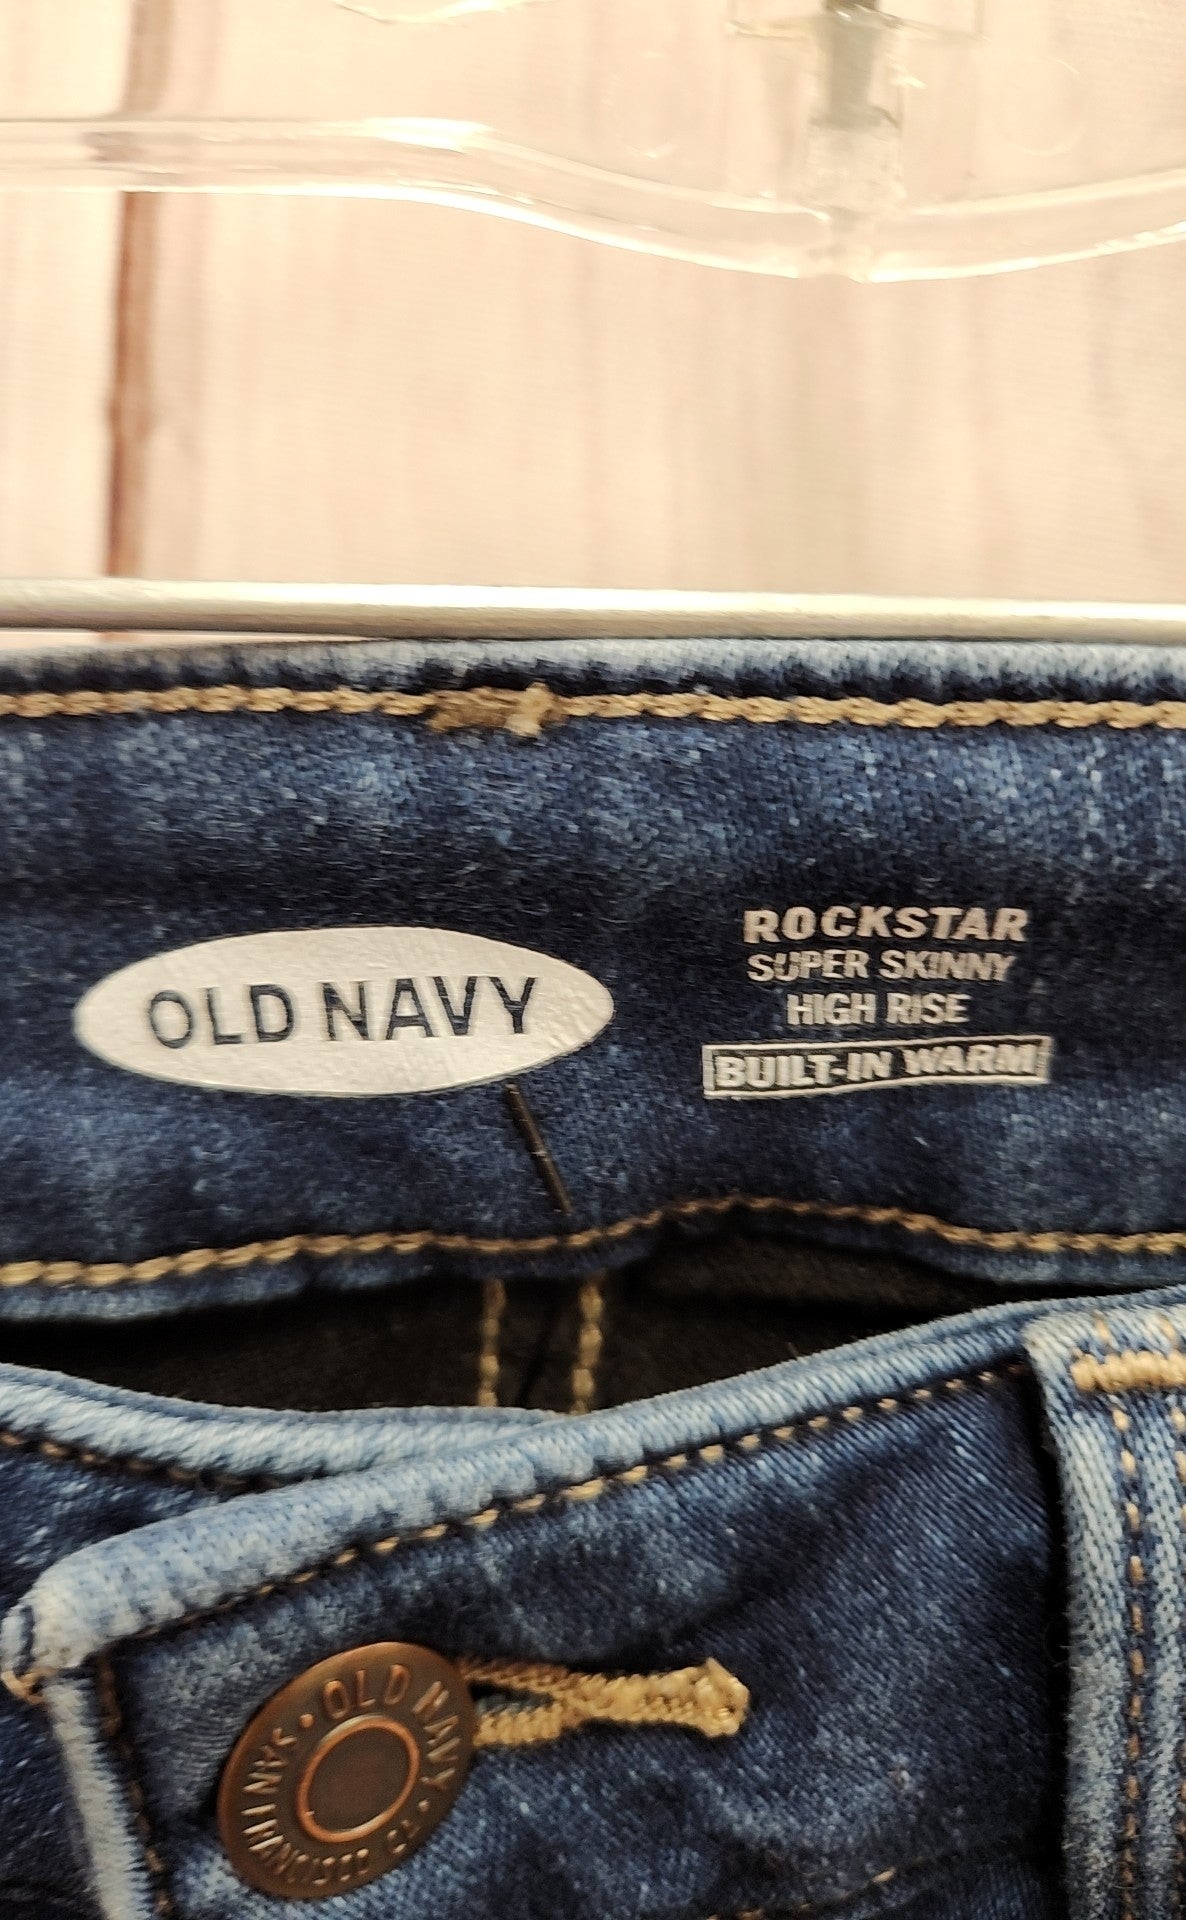 Old Navy Women's Size 25 (0) Rockstar Super Skinny High Rise Blue Jeans